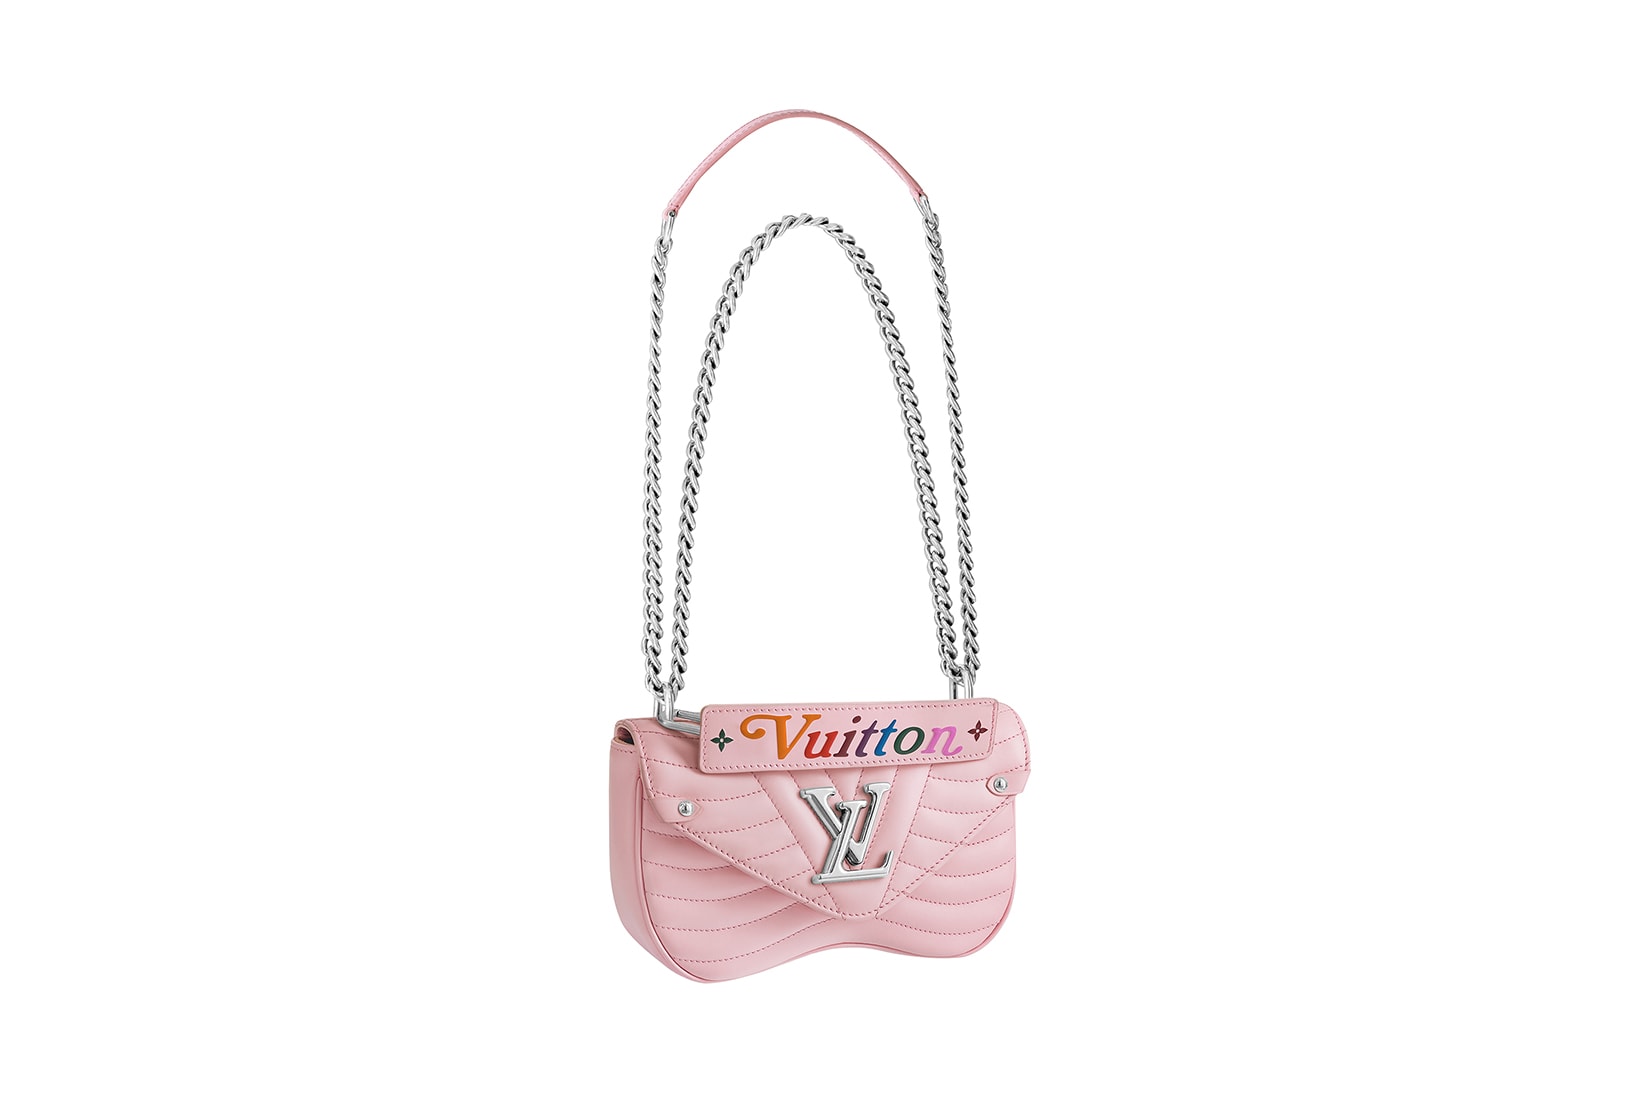 Louis Vuitton Pre-Fall 2018 New Wave Handbags Smoothie Pink Malibu Green Black Red White Bags